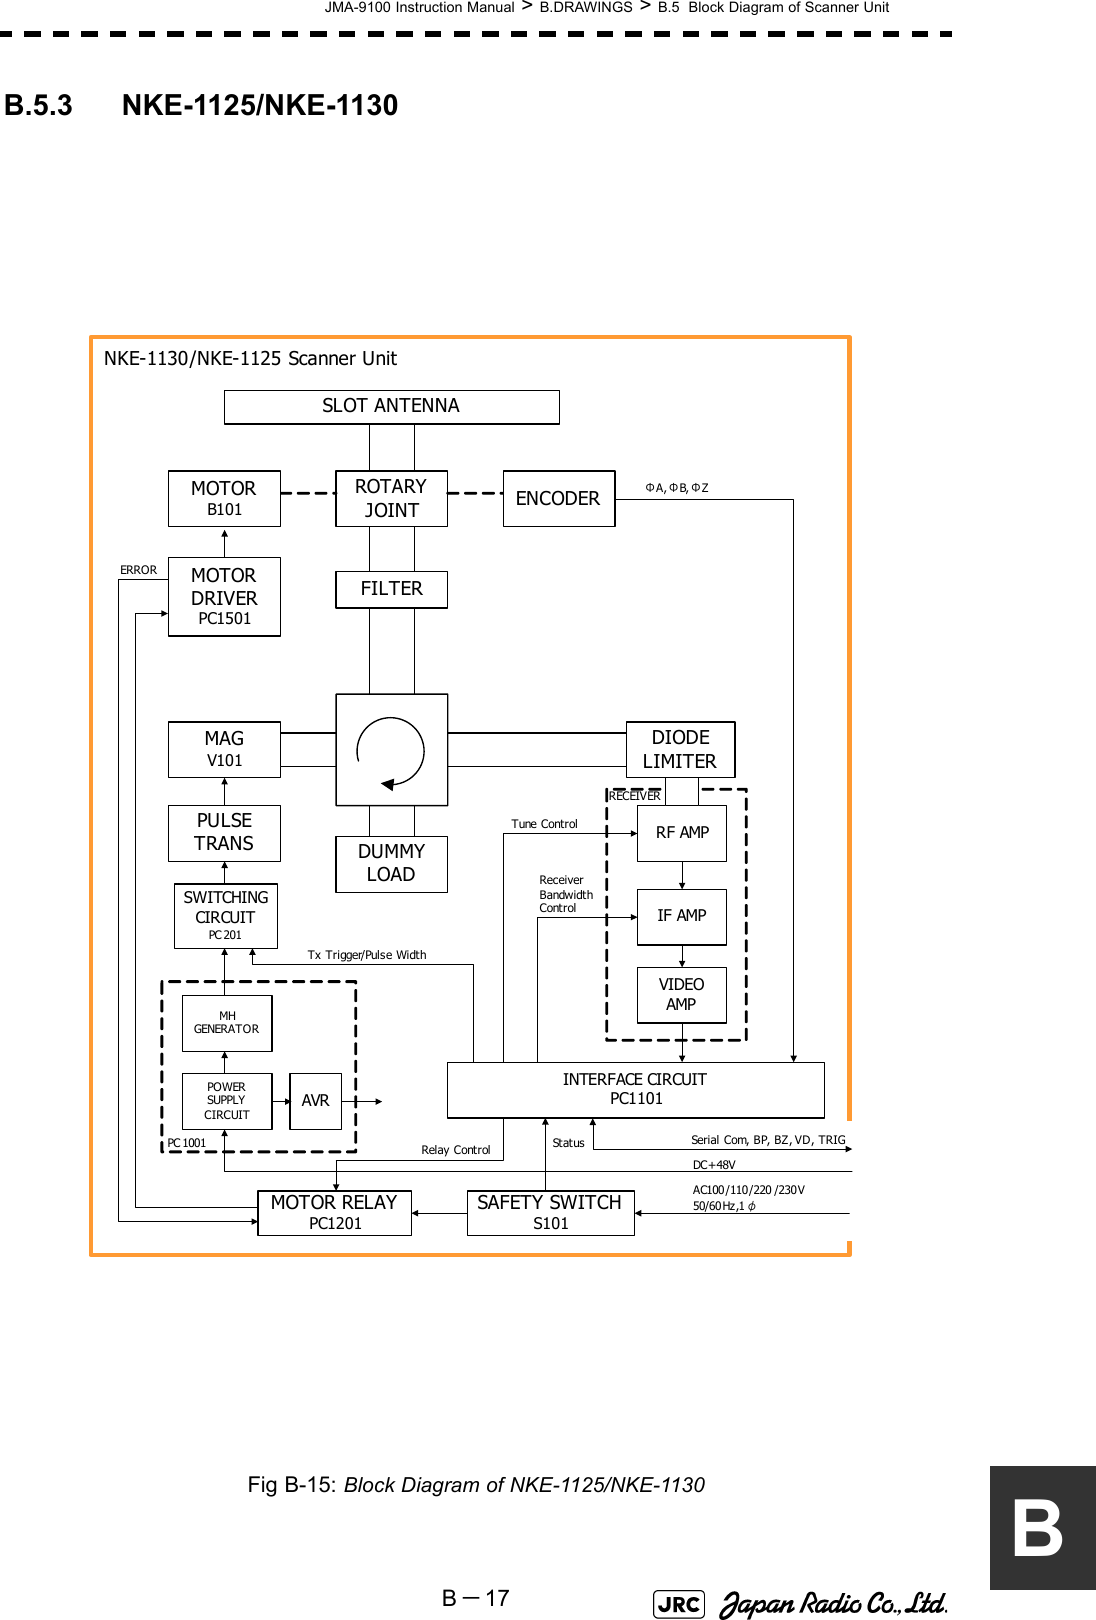 JMA-9100 Instruction Manual &gt; B.DRAWINGS &gt; B.5  Block Diagram of Scanner UnitB－17BB.5.3 NKE-1125/NKE-1130Fig B-15: Block Diagram of NKE-1125/NKE-1130SLOT ANTENNAROTARYJOINT ENCODERMOTORB101SAFETY SWITCHS101MAGV101PULSETRANSSWITCHINGCIRCUITPC 201MHGENERATORAVRINTERFACE CIRCUITPC1101PC 1001DIODELIMITERRF AMPIF AMPVIDEO AMPRECEIVERReceiver BandwidthControlTune ControlTx Trigger/Pulse WidthΦA,ΦB, ΦZFILTERDUMMYLOADMOTORDRIVERPC1501AC100 /110 /220 /230 V50/60 Hz,1 φDC+48VSerial Com, BP, BZ, VD, TRIGNKE-1130/NKE-1125 Scanner UnitPOWER SUPPLYCIRCUITMOTOR RELAYPC1201Relay ControlERRORStatus